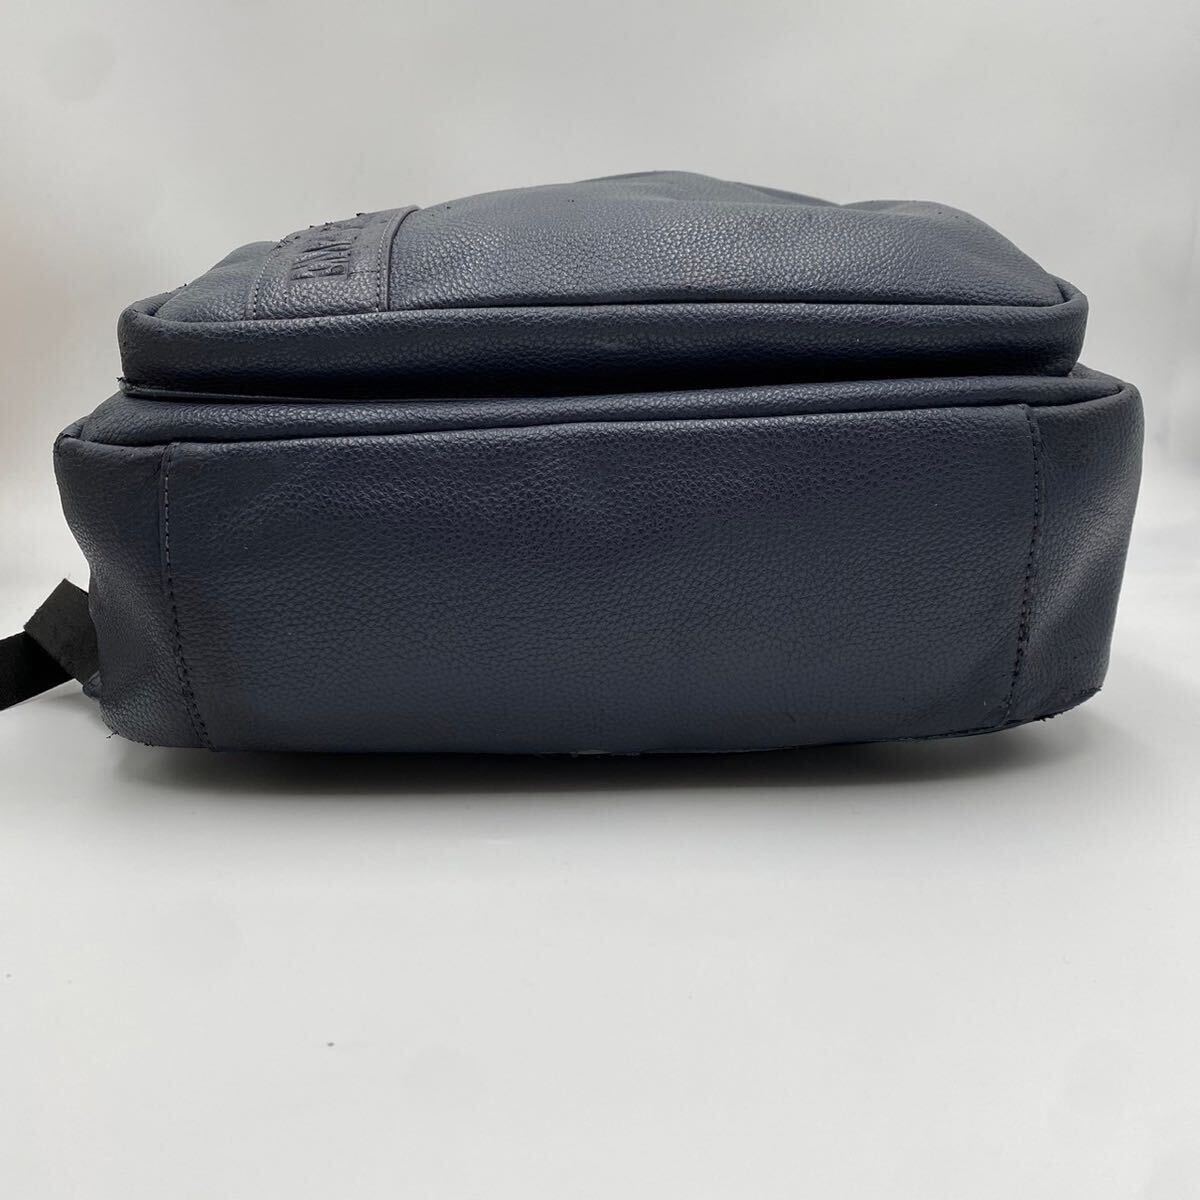 EMPORIO ARMANI Emporio Armani Logo type вдавлено . бизнес кожа рюкзак рюкзак Day Pack мужской темно-синий темно-синий 